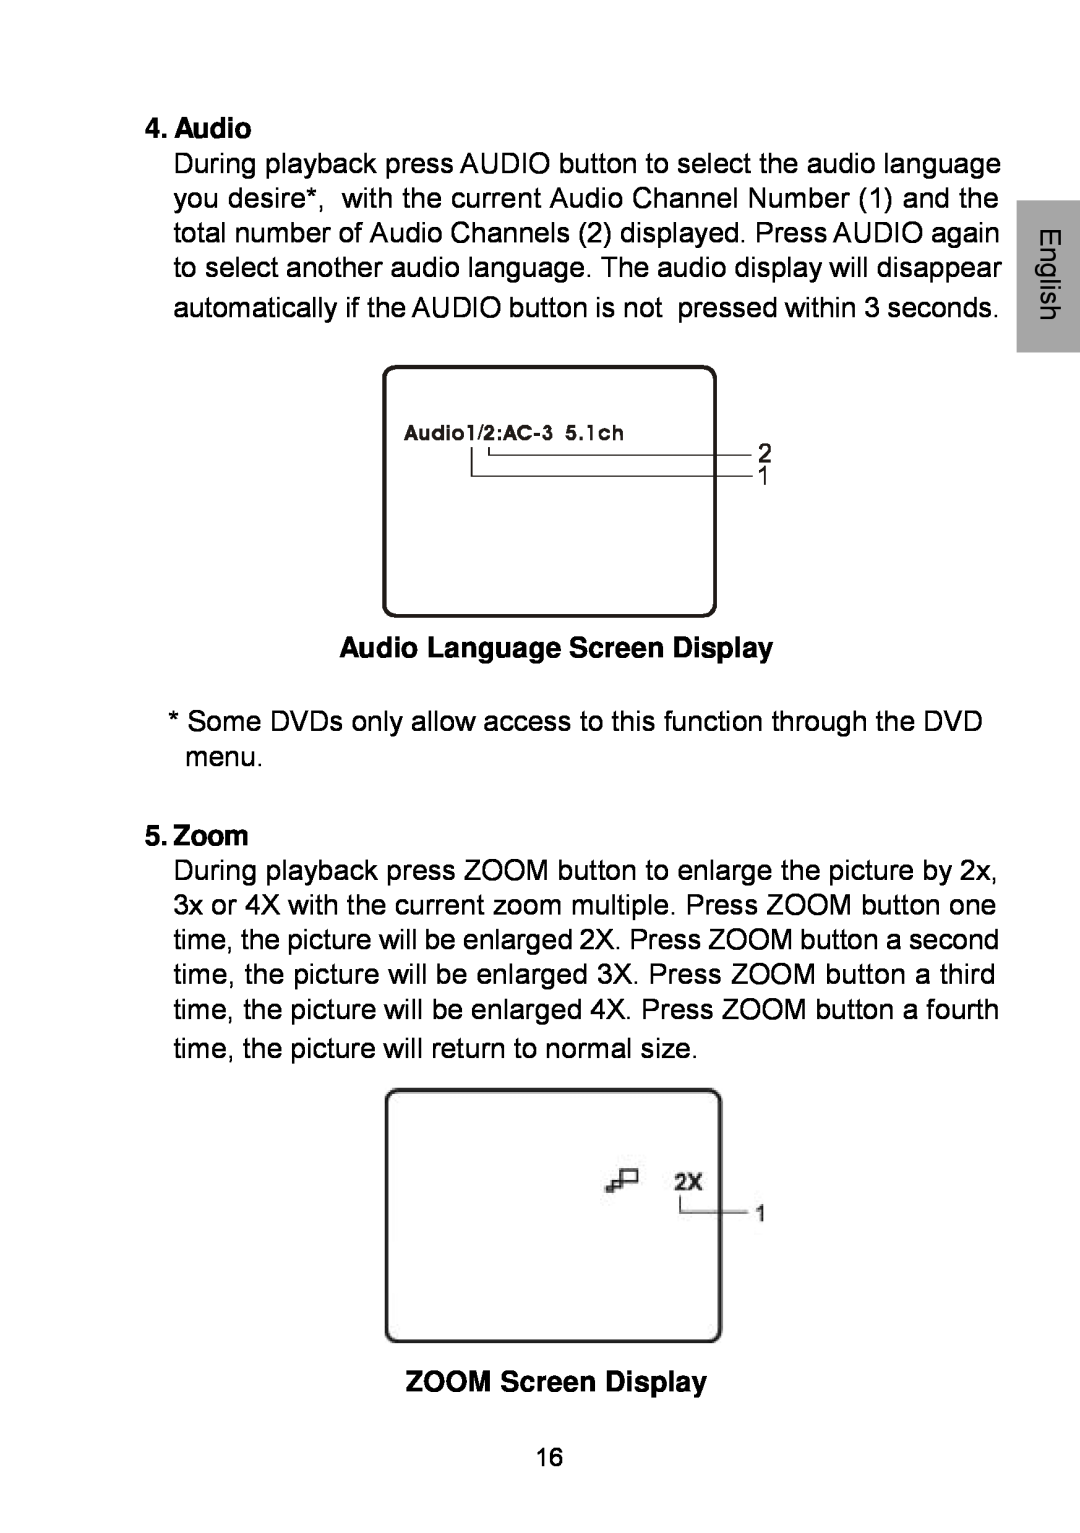 Audiovox D1929B manual Audio Language Screen Display, Zoom, ZOOM Screen Display 